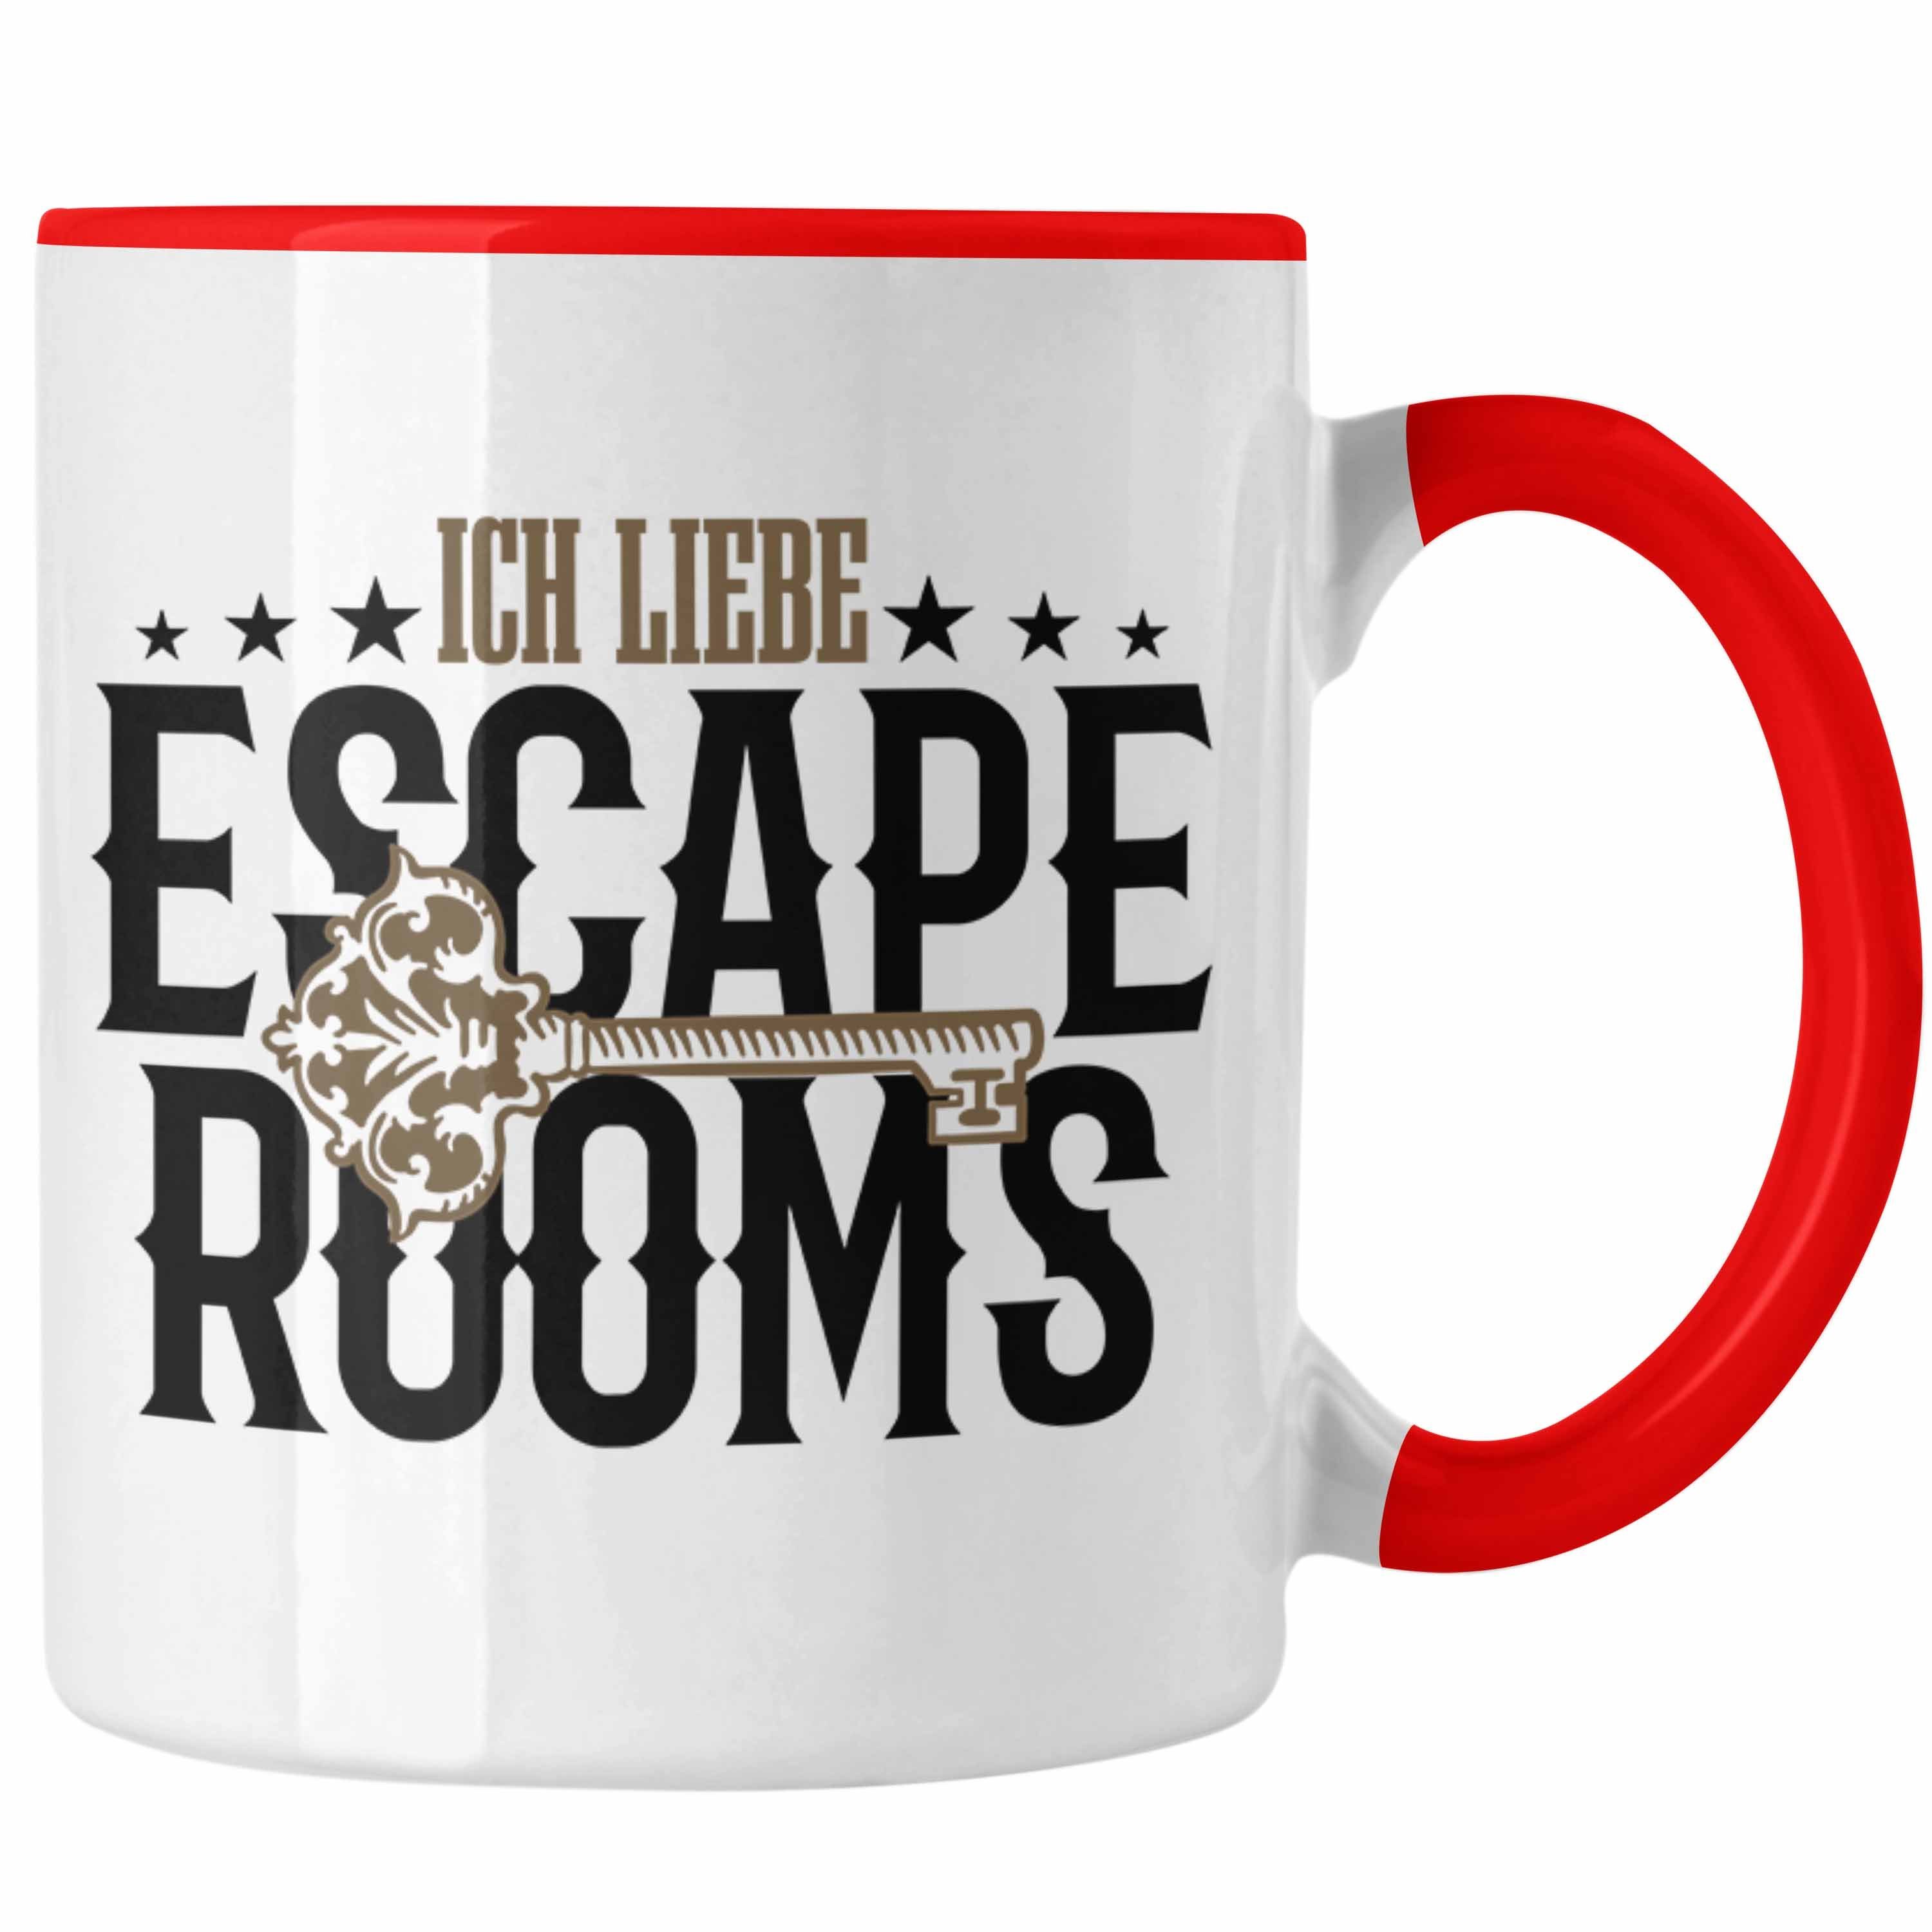 Trendation Tasse Escape Room Lustige Tasse Escape Room Fans Geschenkidee Rot